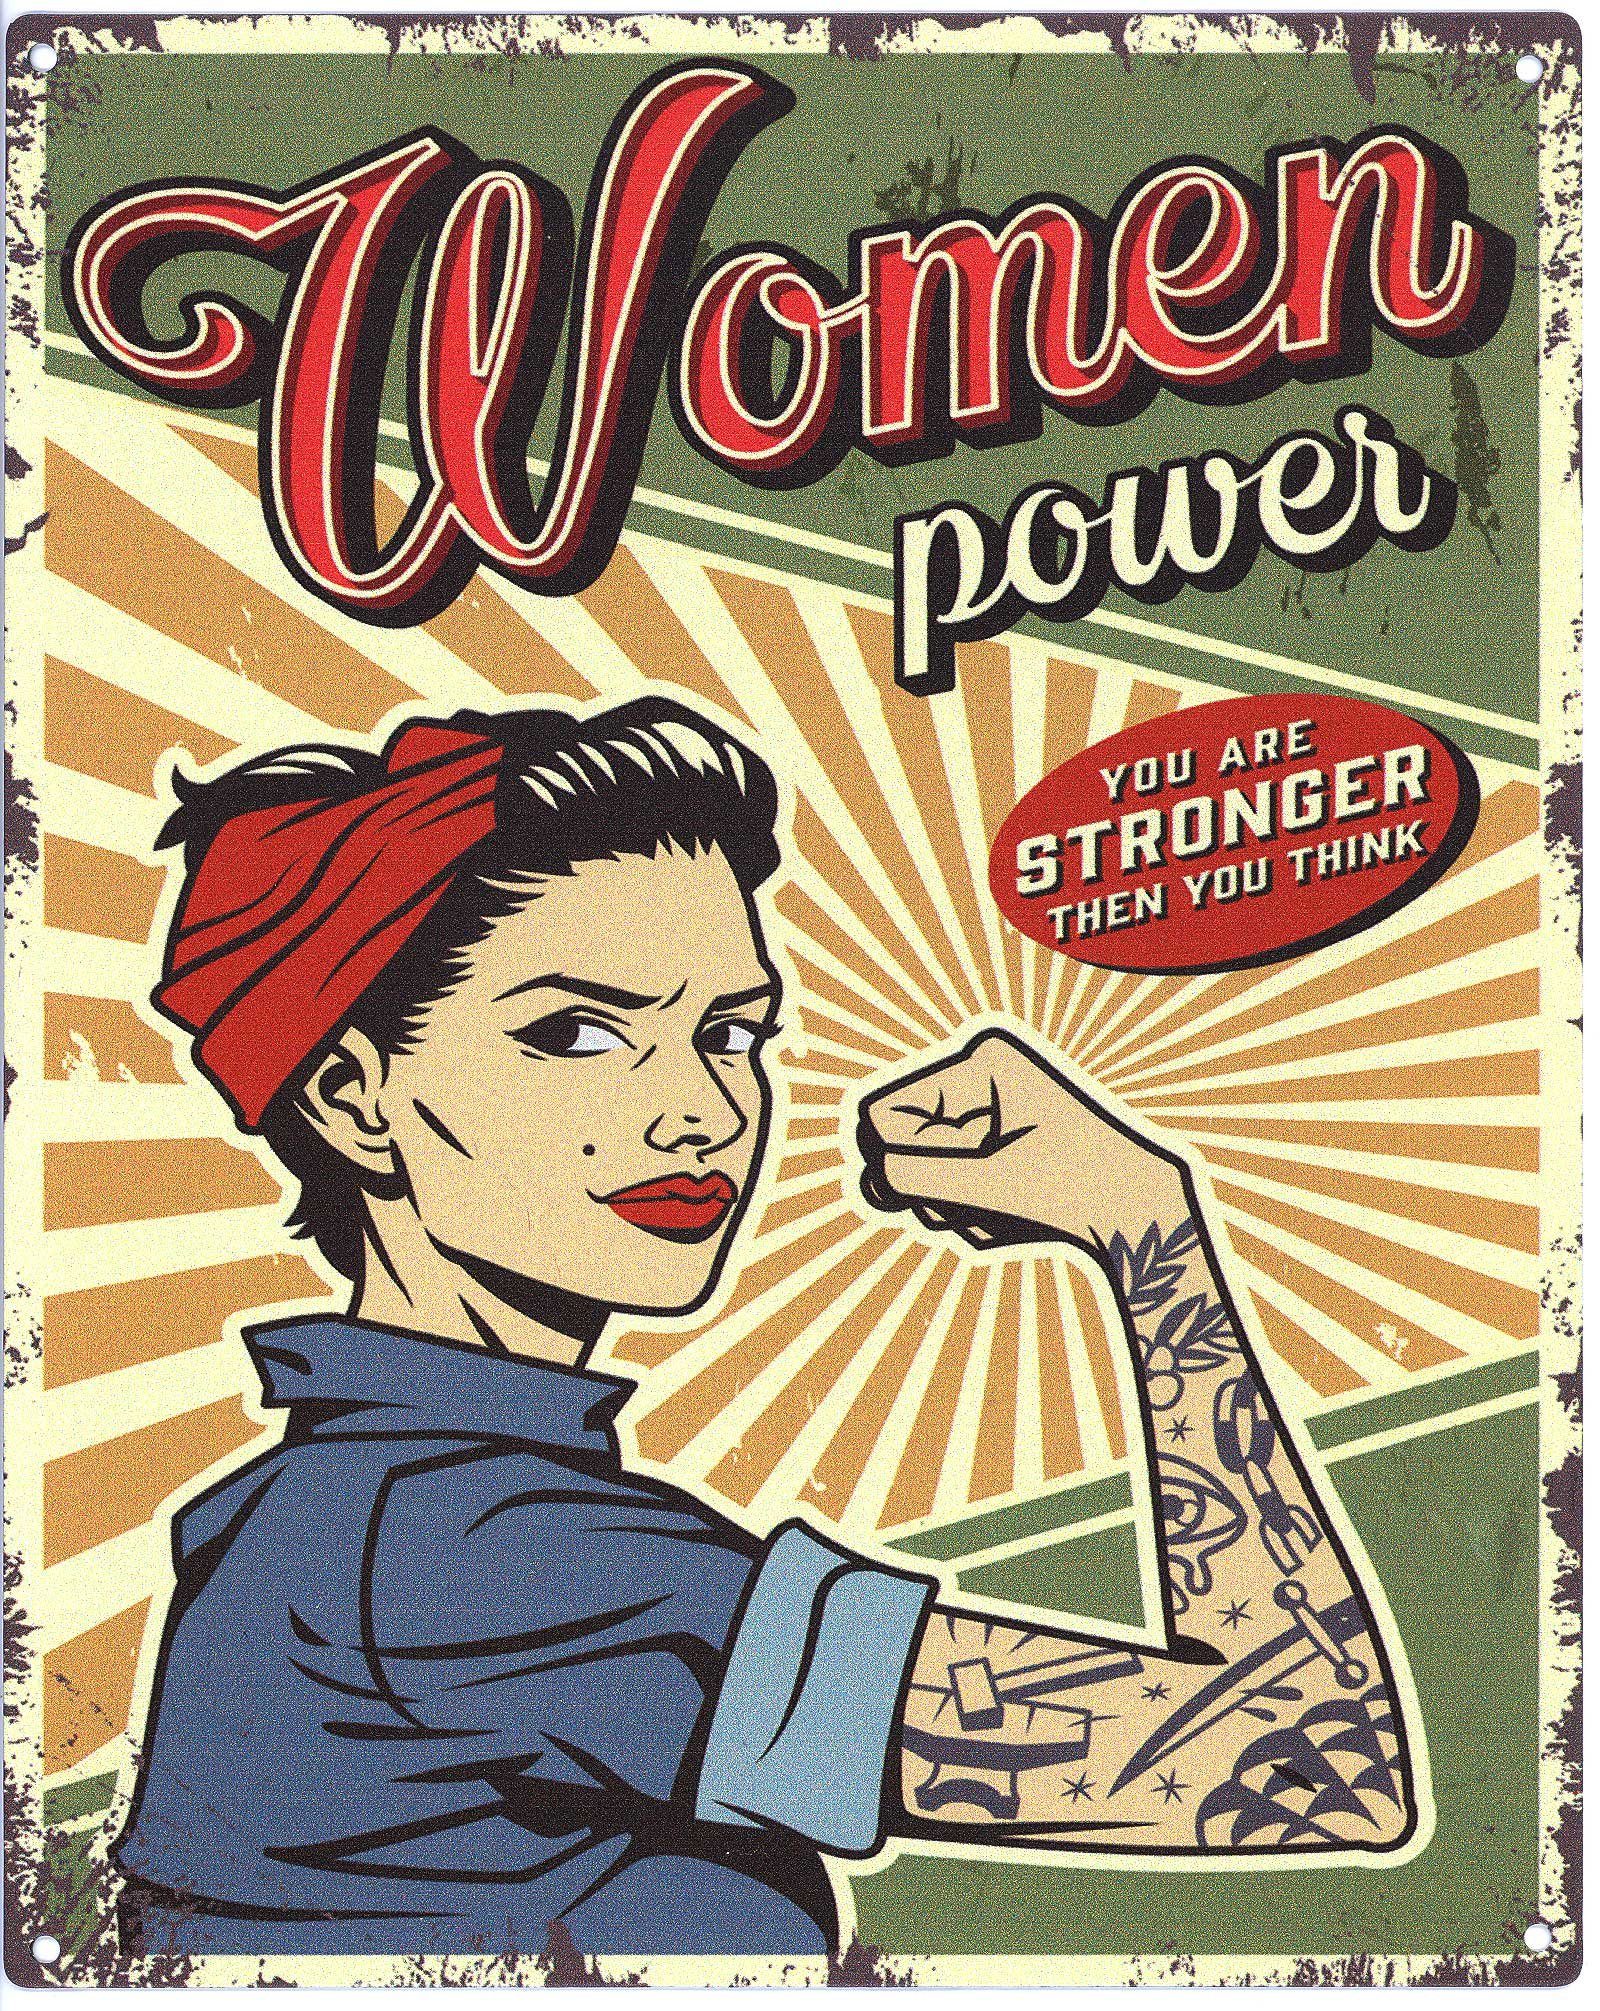 Moritz Metallschild Blechschild Woman Power Stronger the you think, (Einzeln), 20 x 25 cm Vintage Retro Deko Schild Metallschild Wandbild Schild